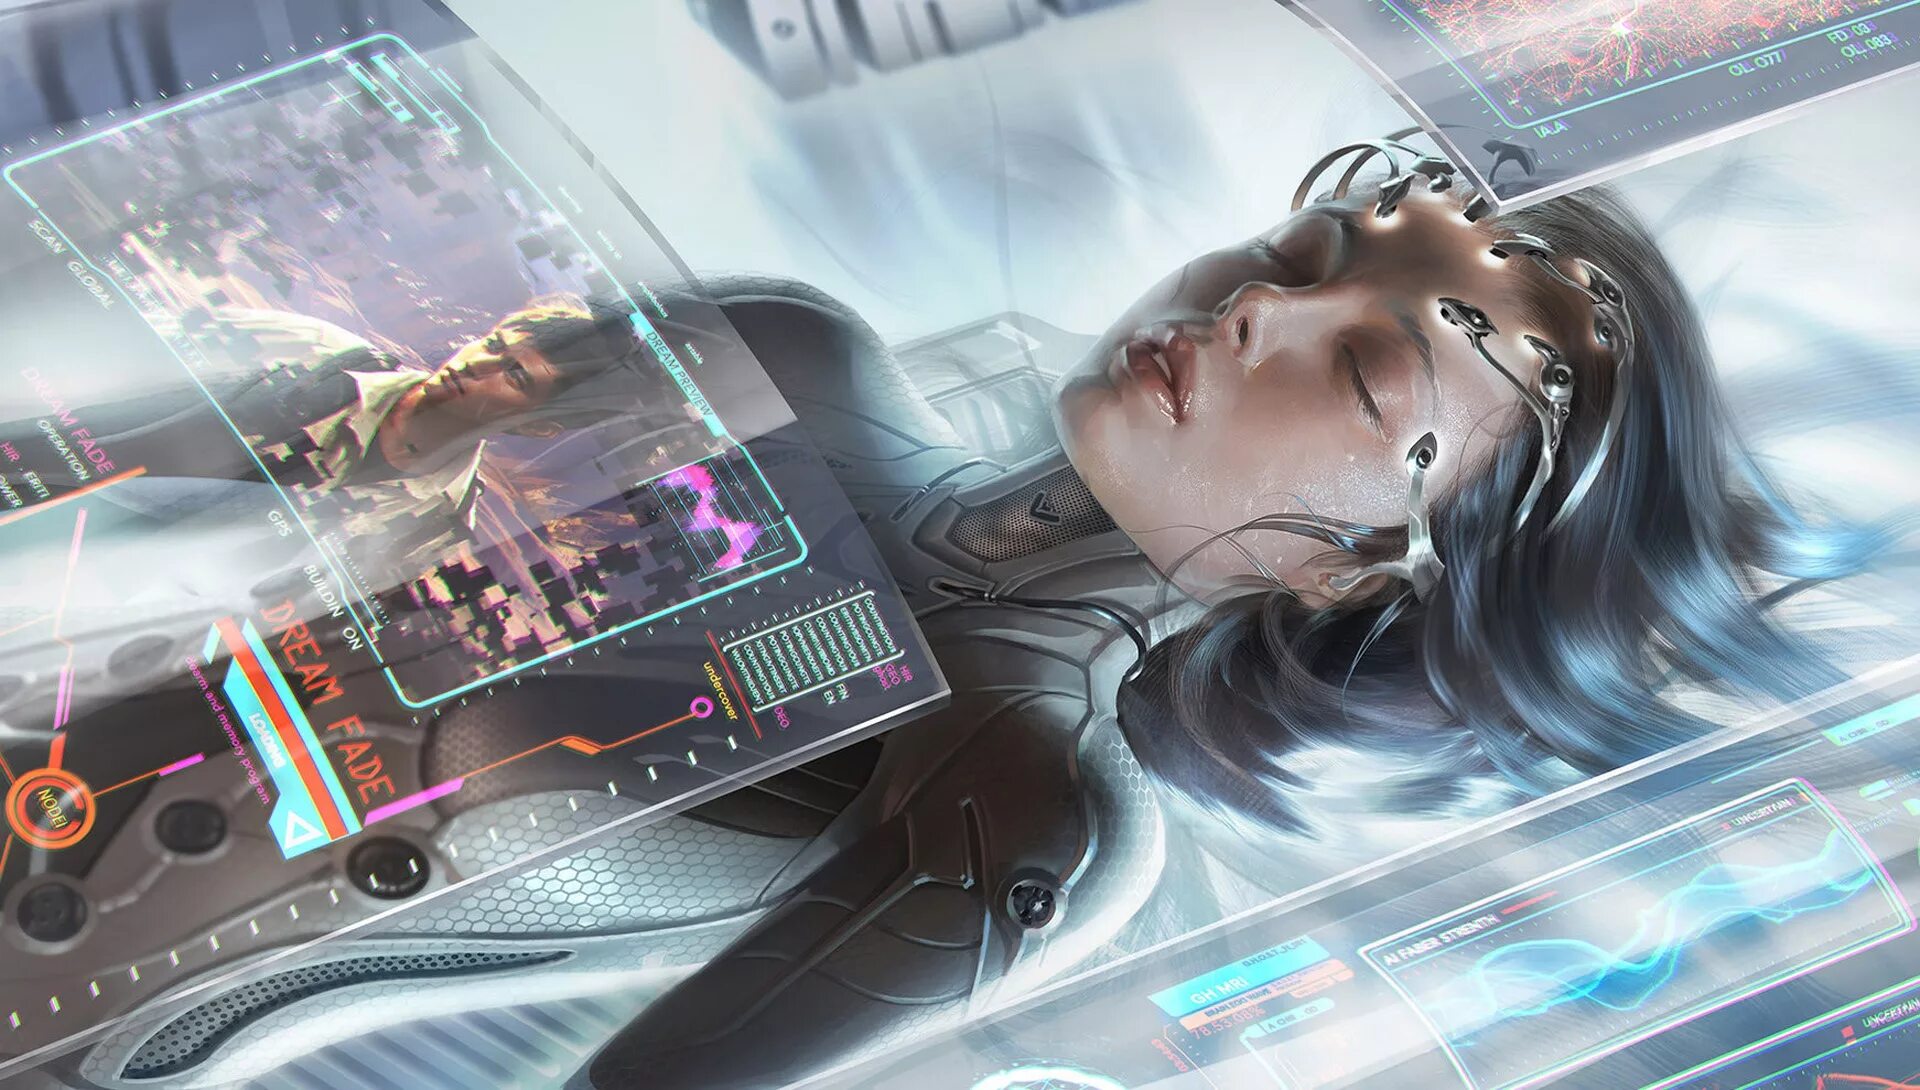 Биочип киберпанк 2077. Нейроинтерфейс Cyberpunk 2077. Sci Fi киберпанк. Биочип киберпанк. Future user